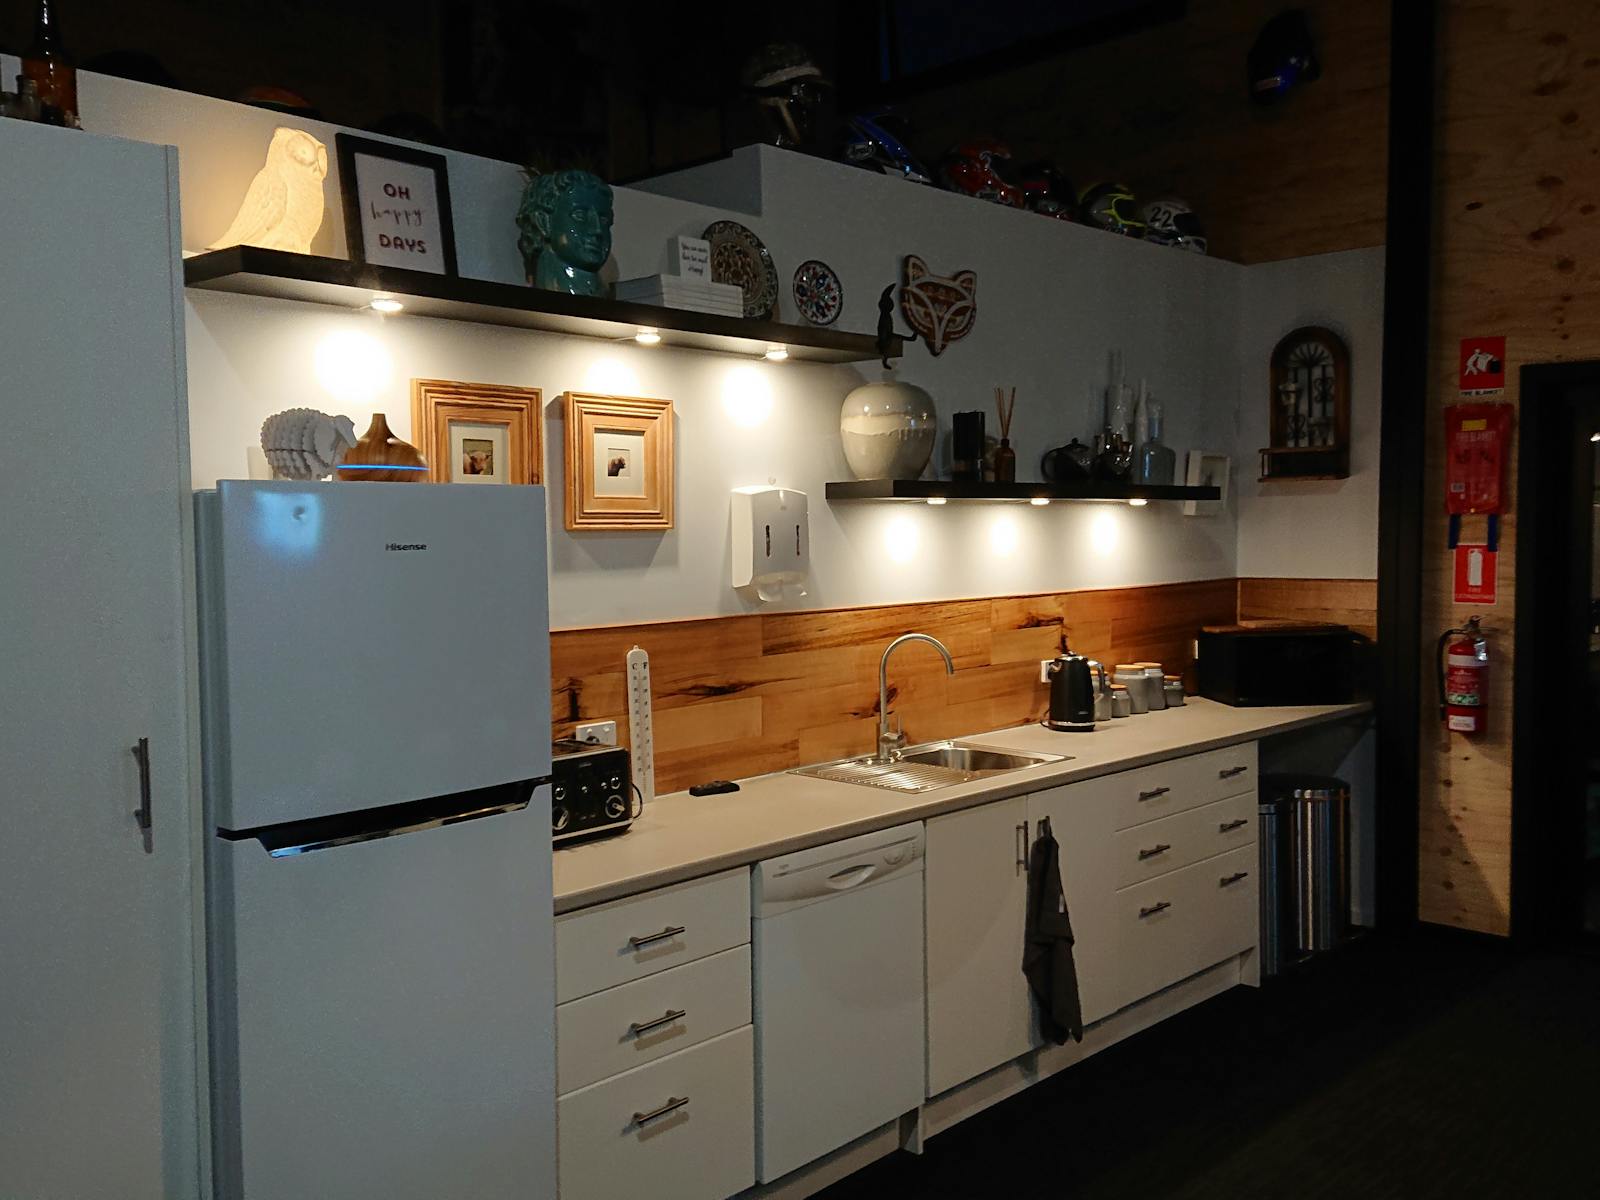 fridge,kitchen bench,microwave